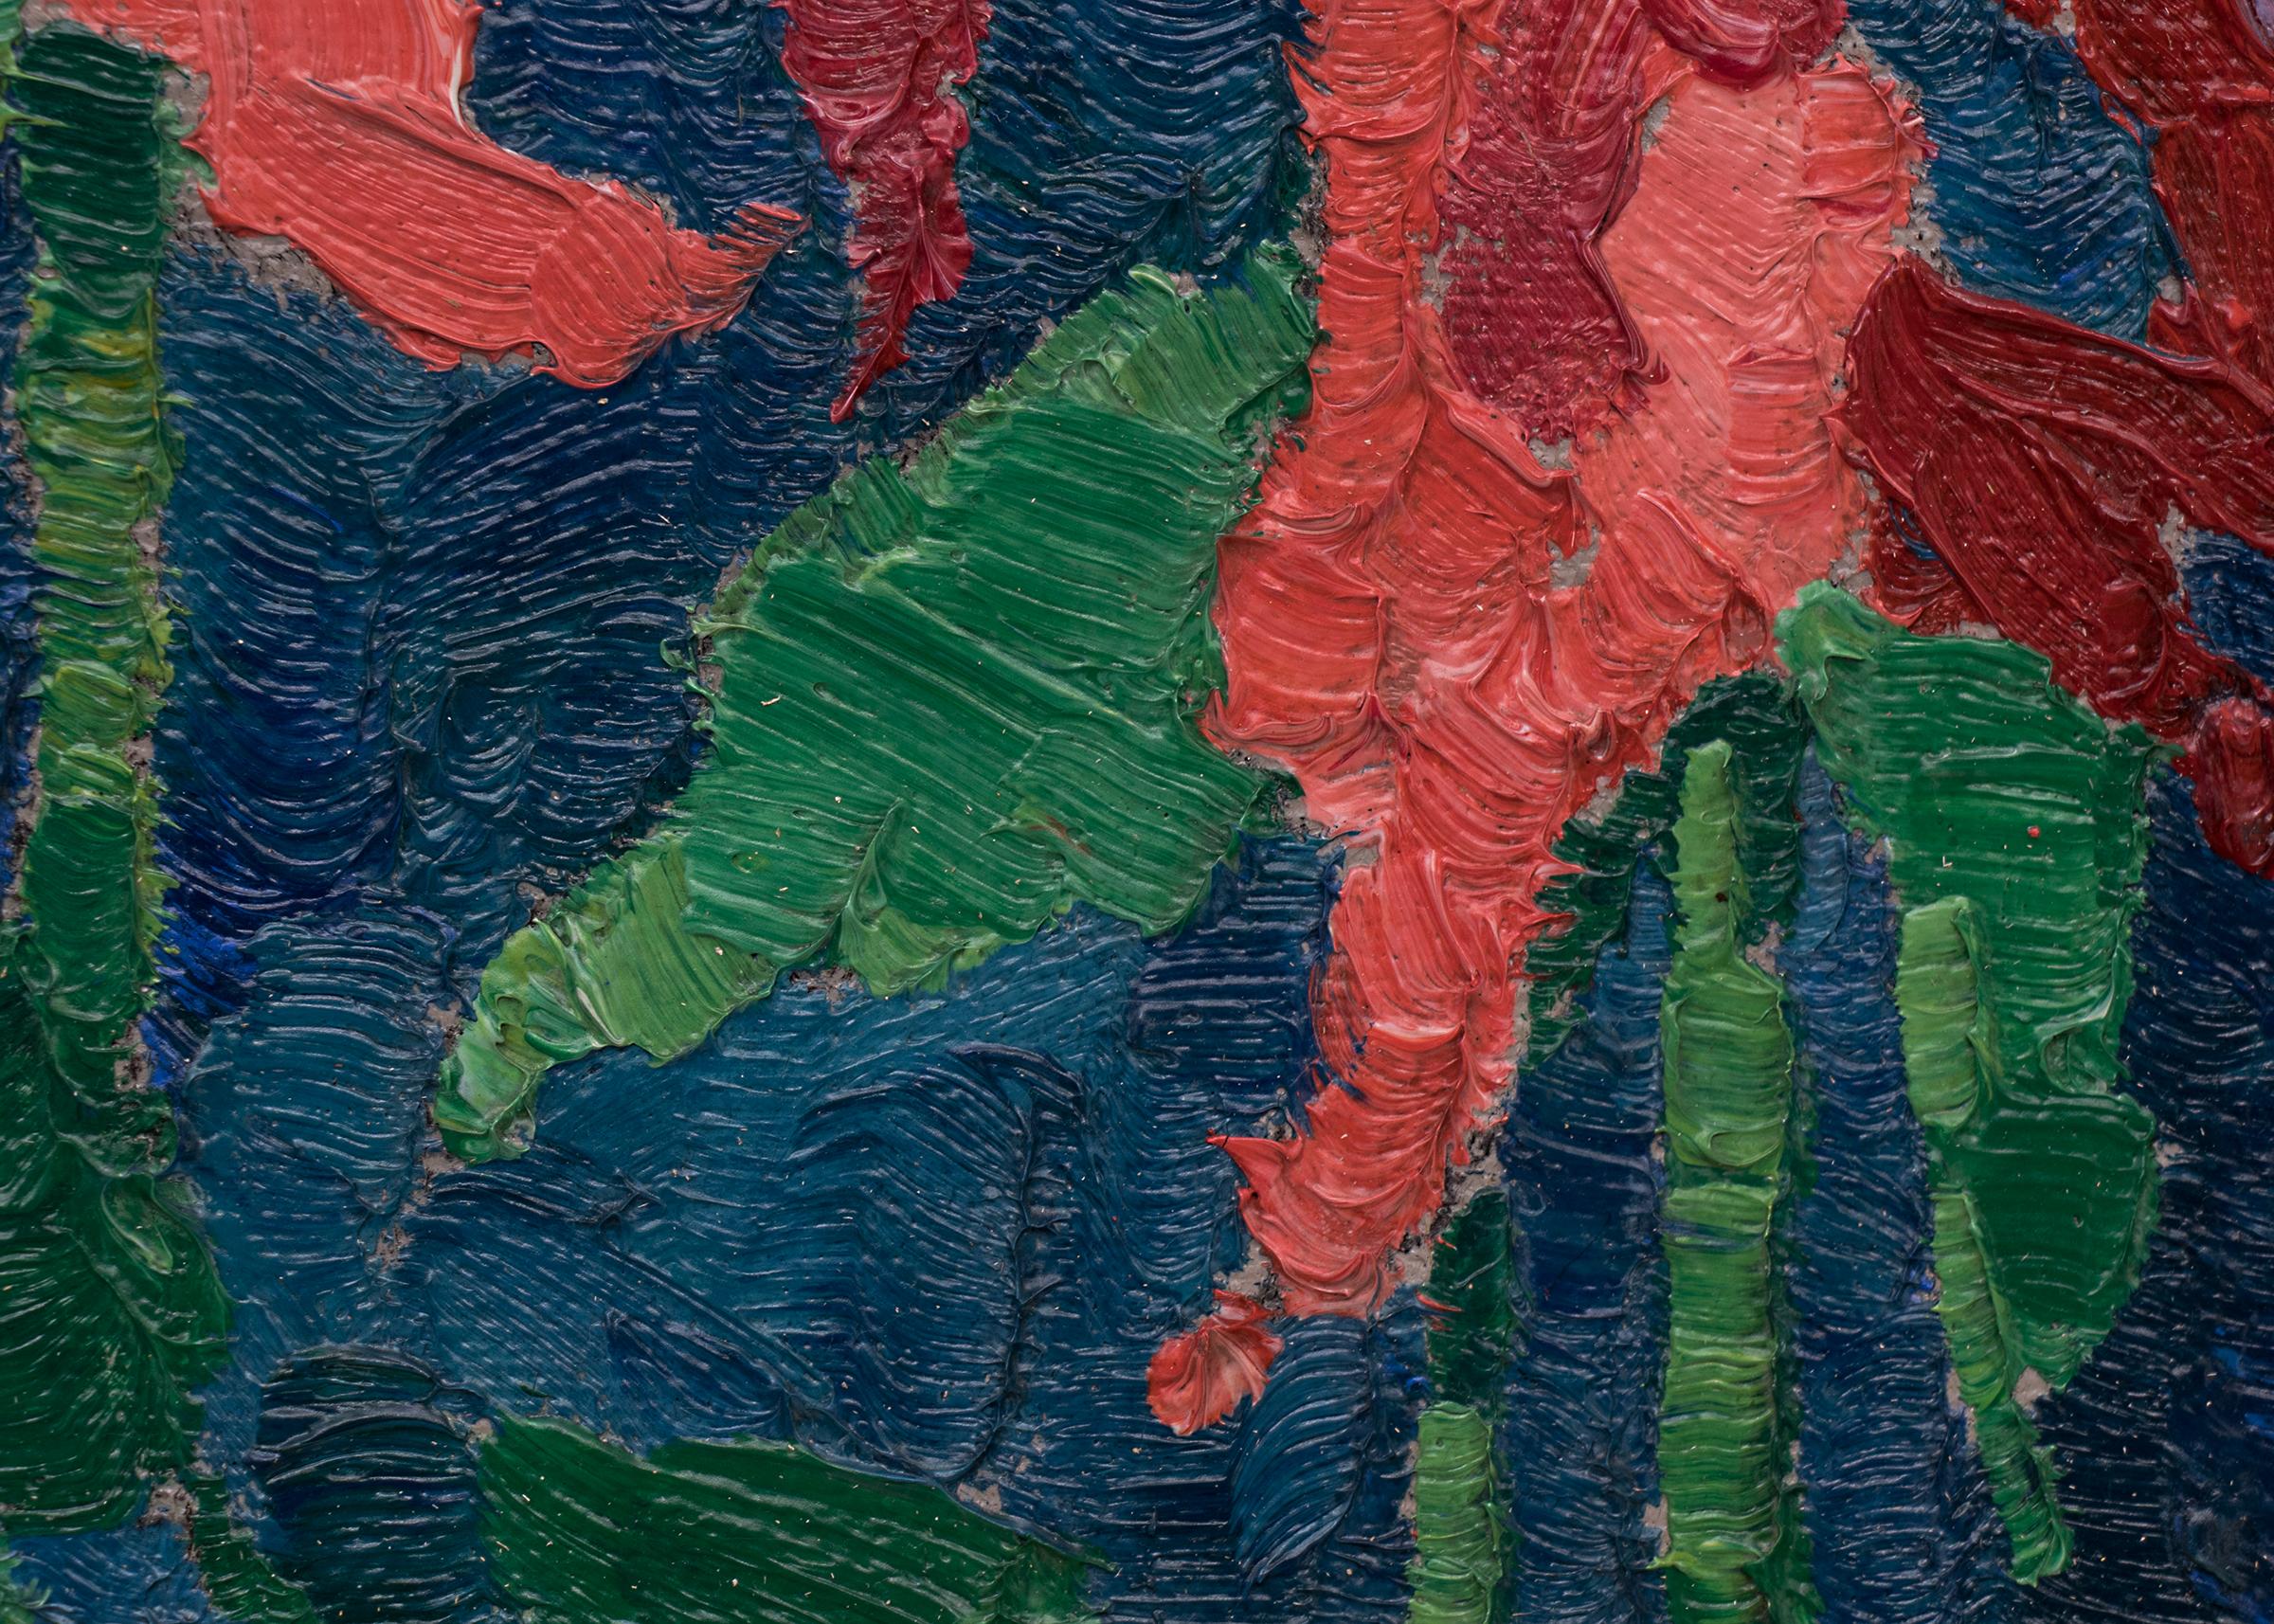 Untitled (Poinsettias) - American Impressionist Painting by Birger Sandzen